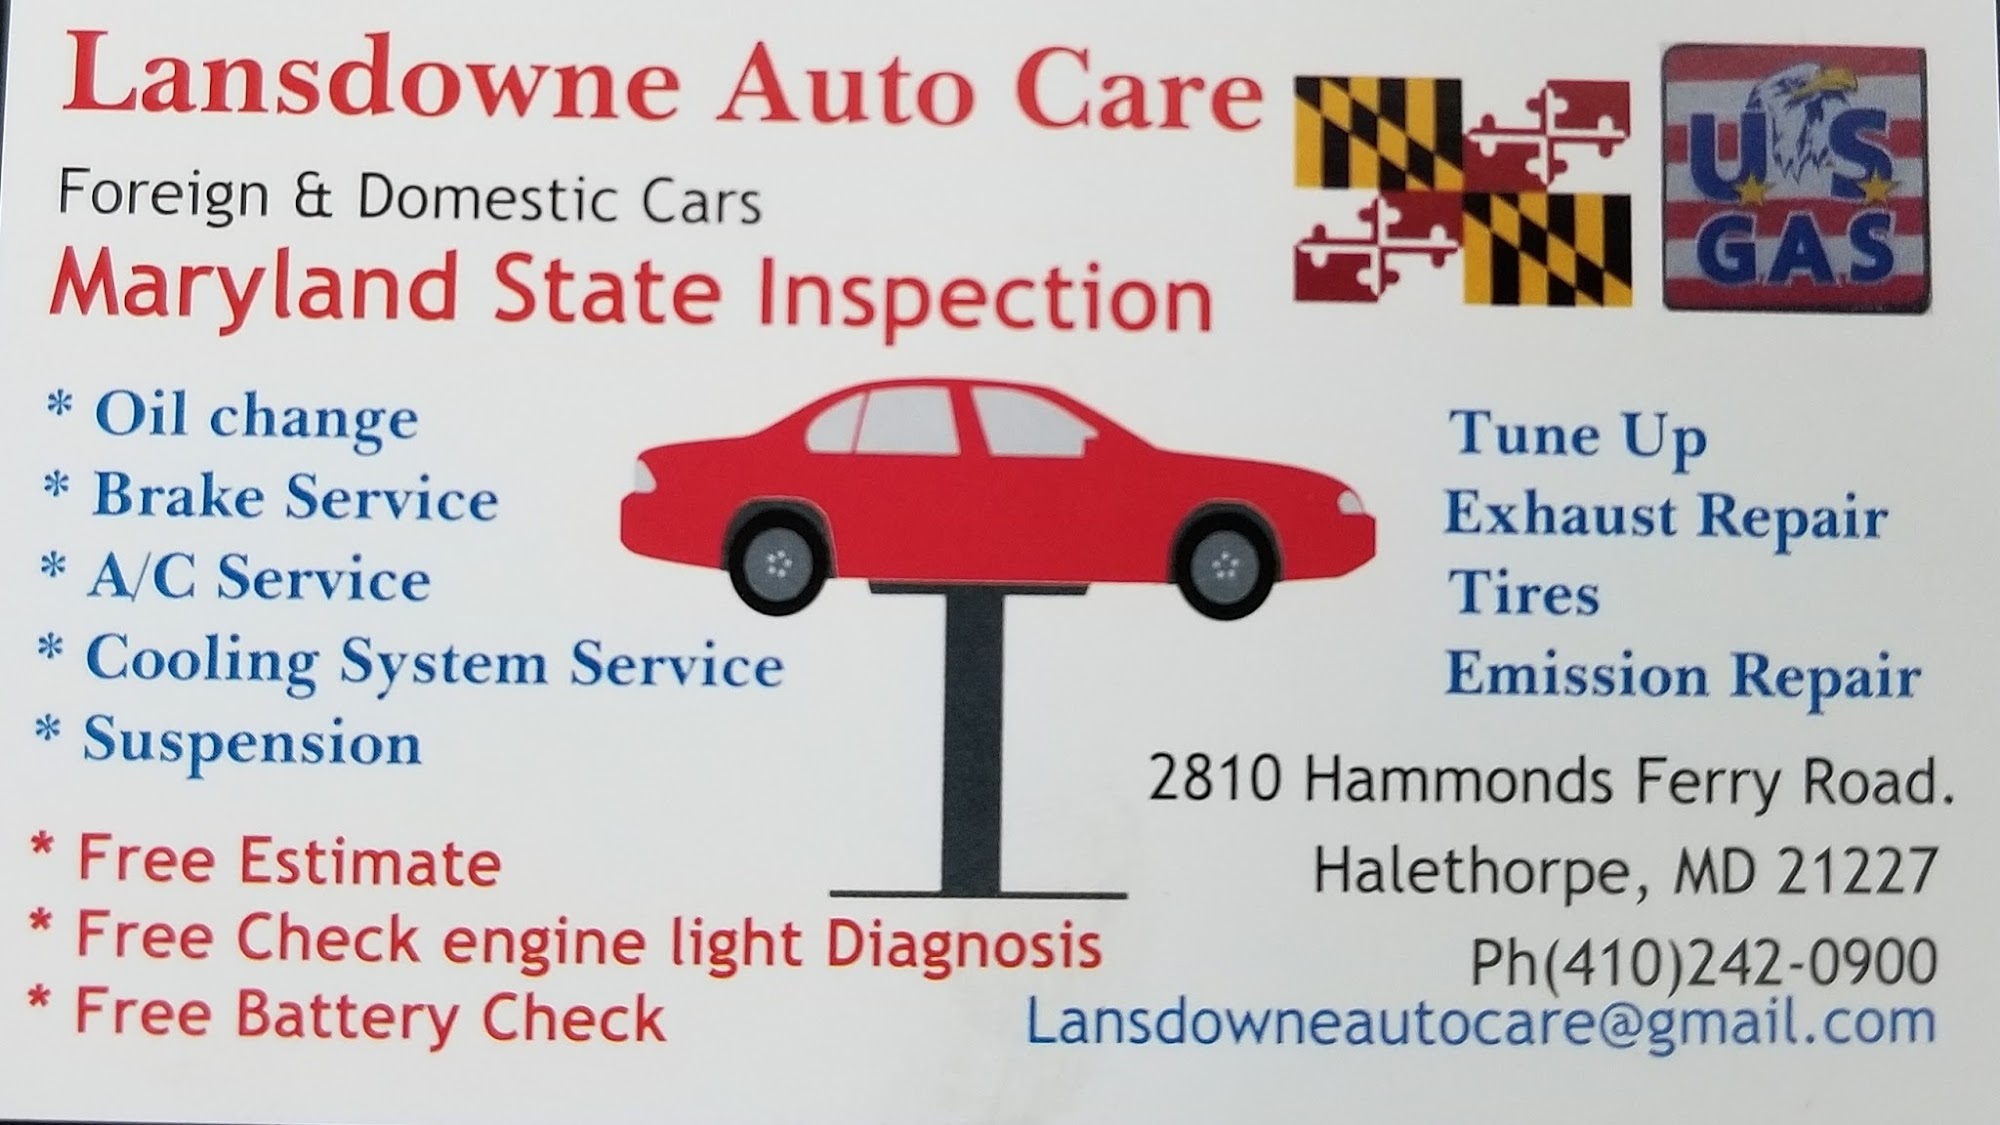 Lansdowne Auto Care